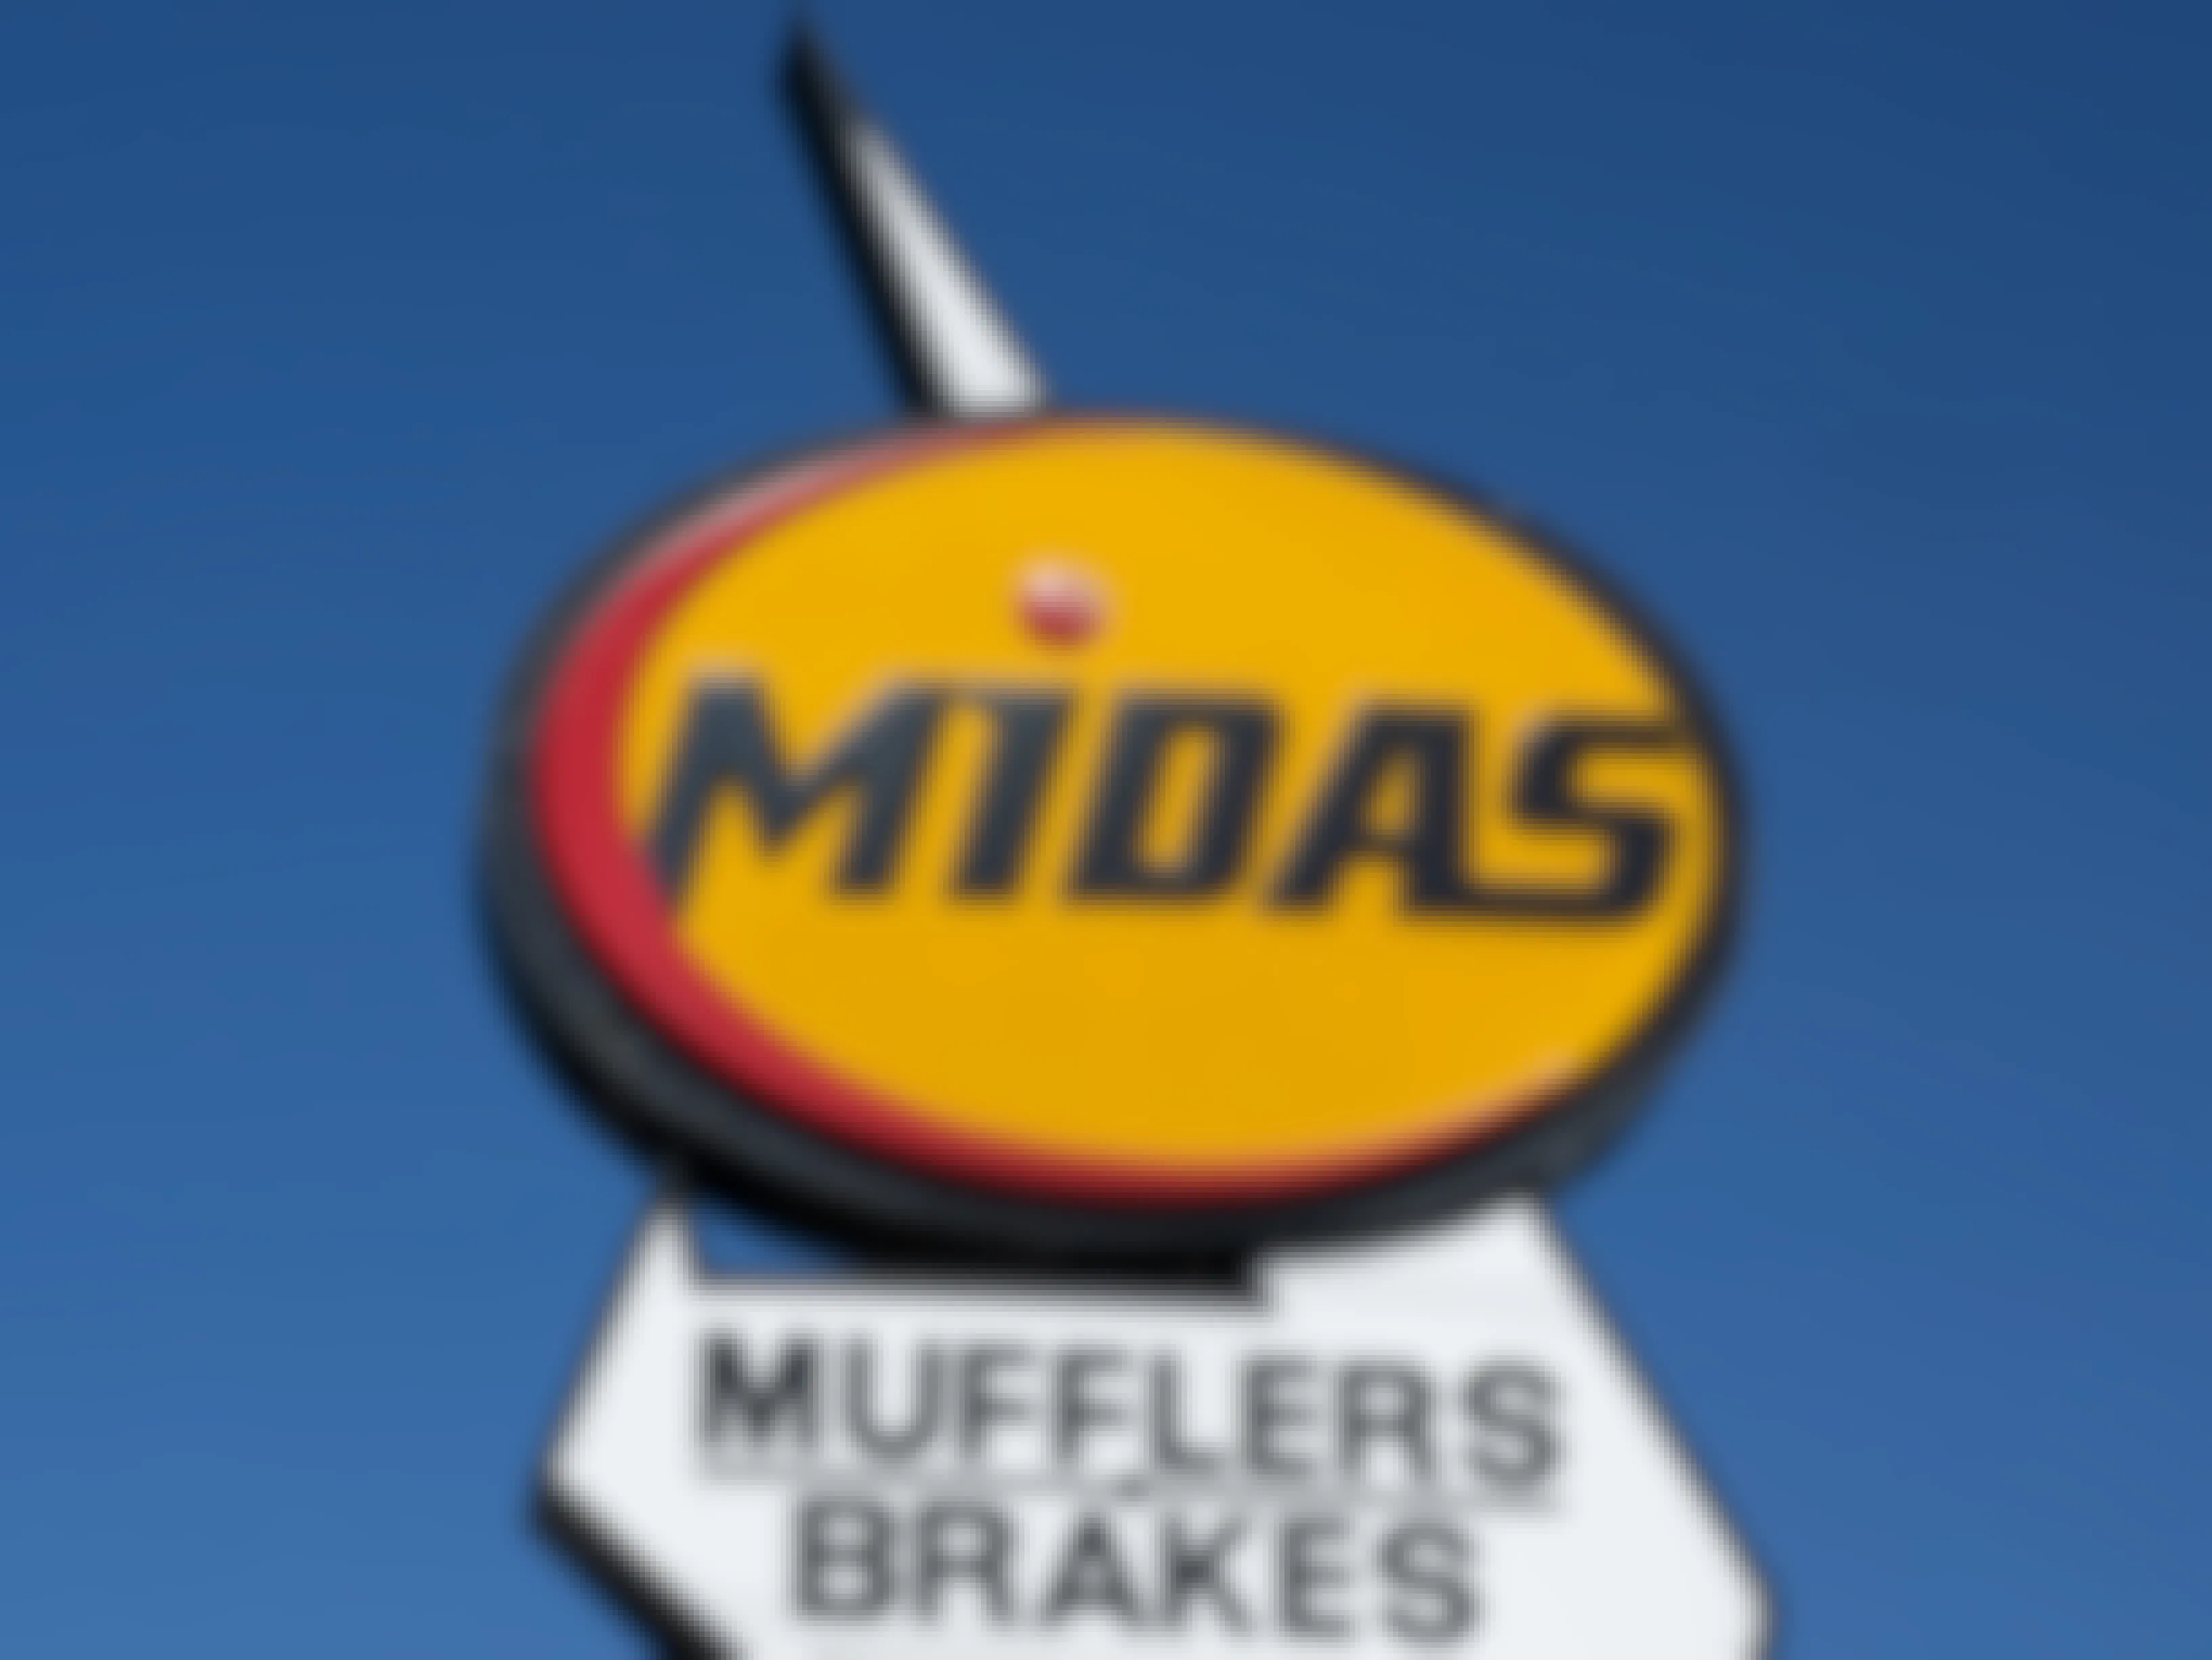 A Midas auto shop sign